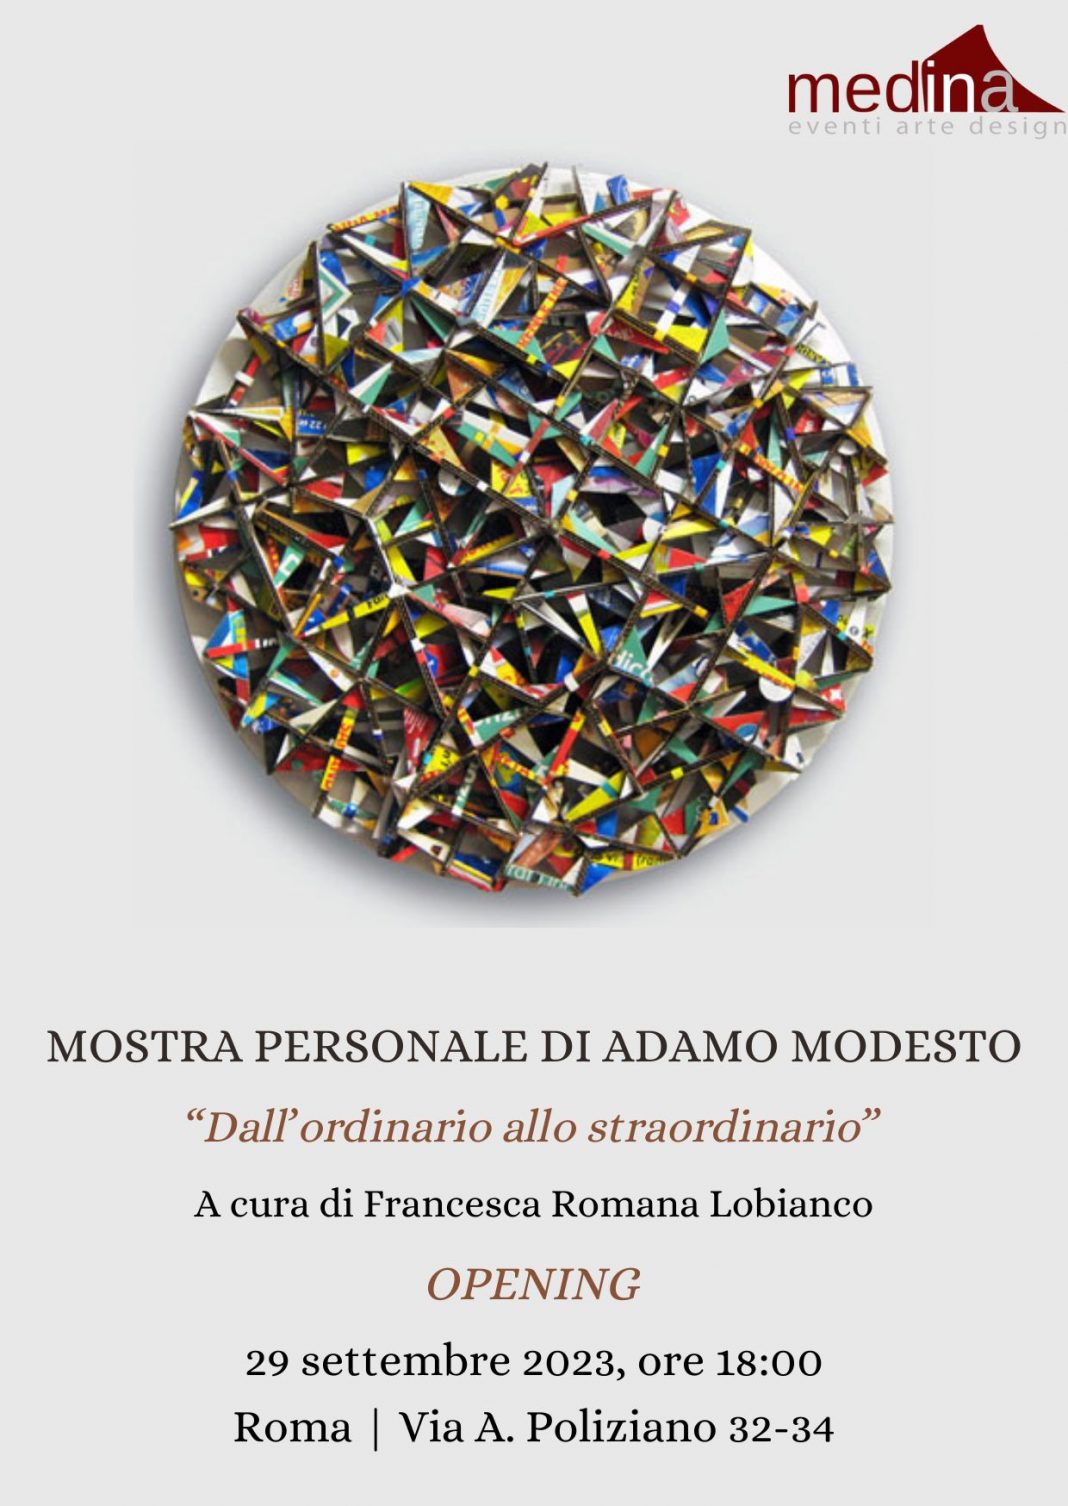 Adamo Modesto – Dall’ordinario allo straordinariohttps://www.exibart.com/repository/media/formidable/11/img/c96/adamomodesto-1068x1506.jpg